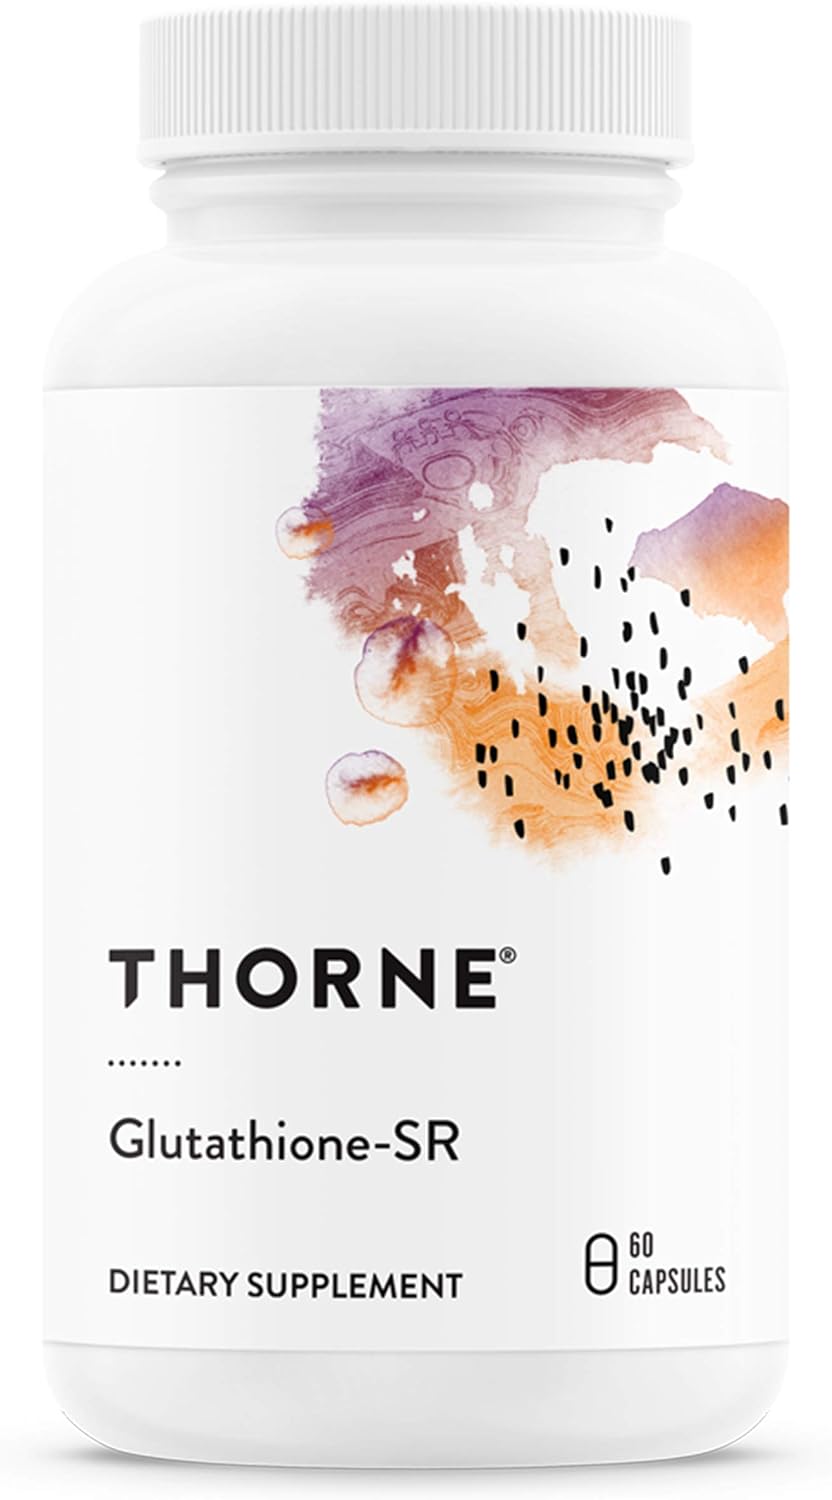 Thorne Glutathione-SR - Sustained-Release Glutathione for Antioxidant